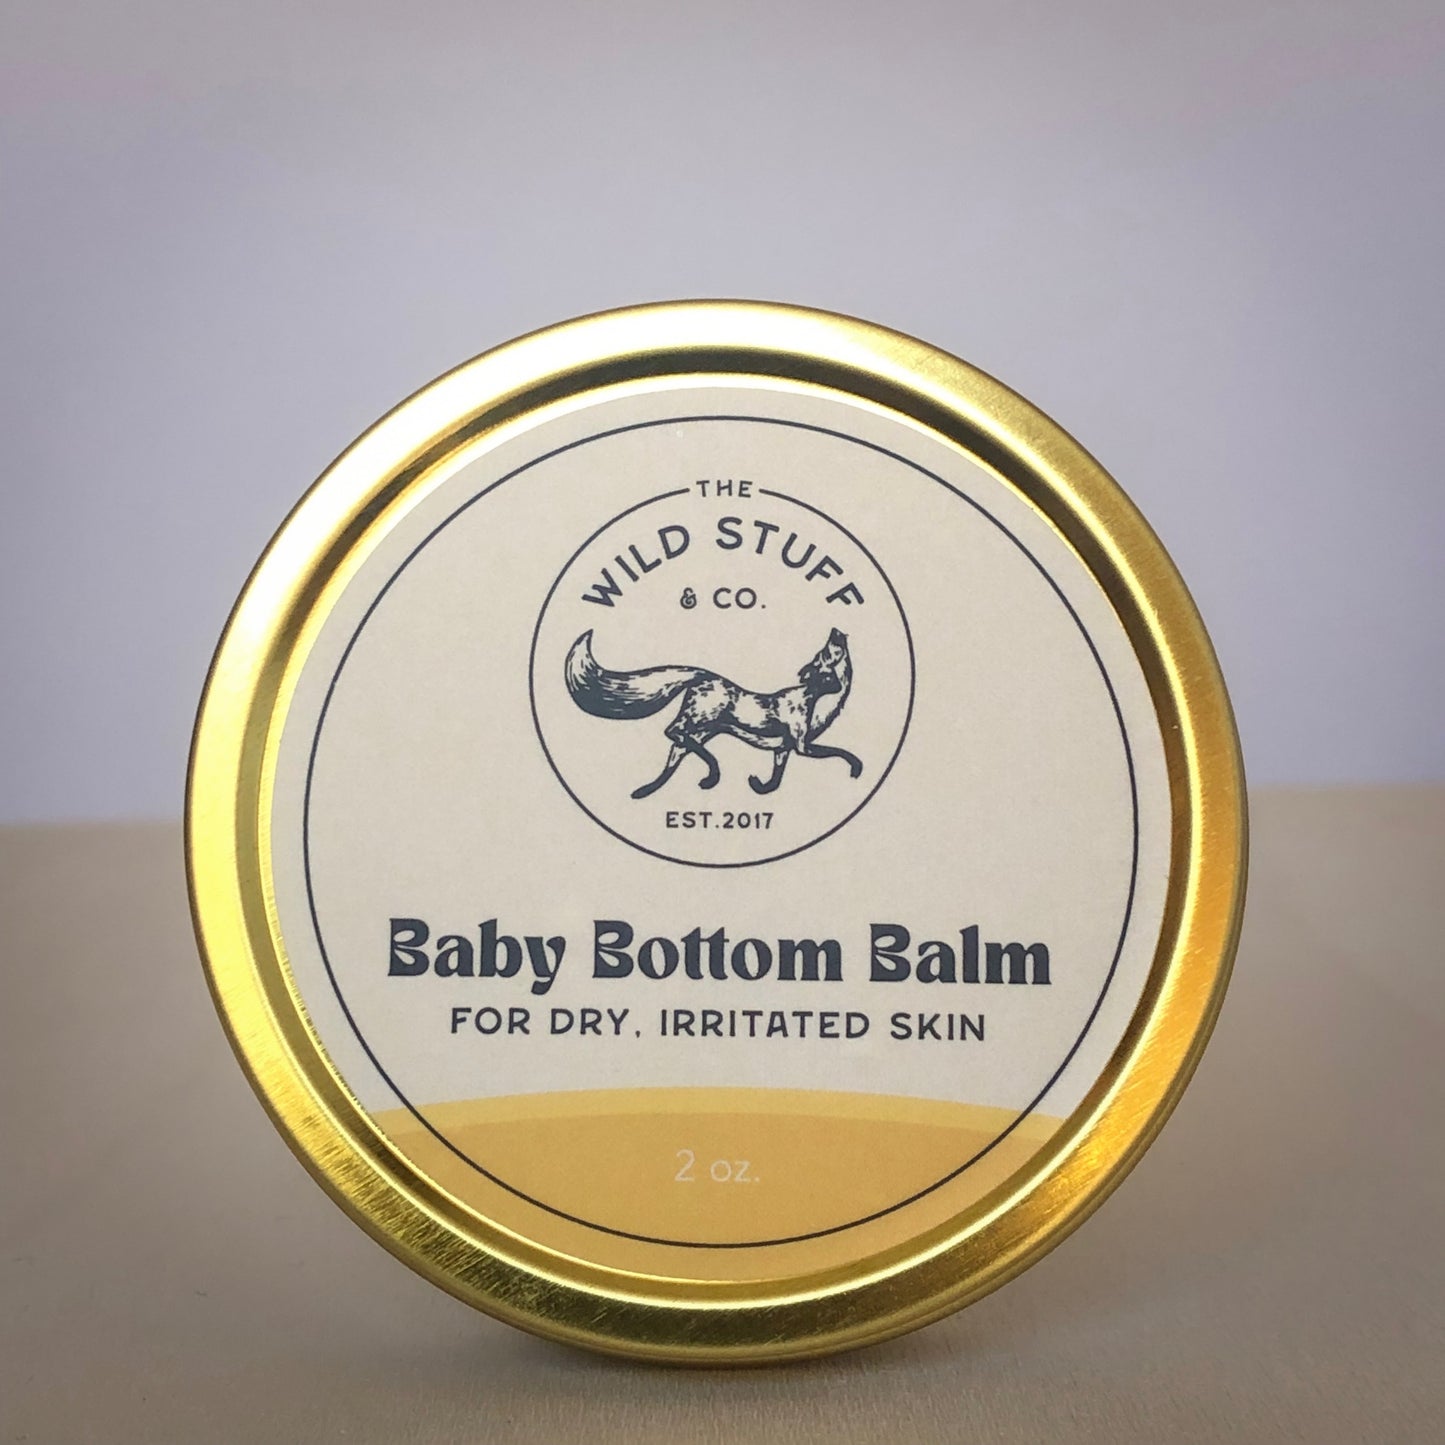 Baby Bottom Balm